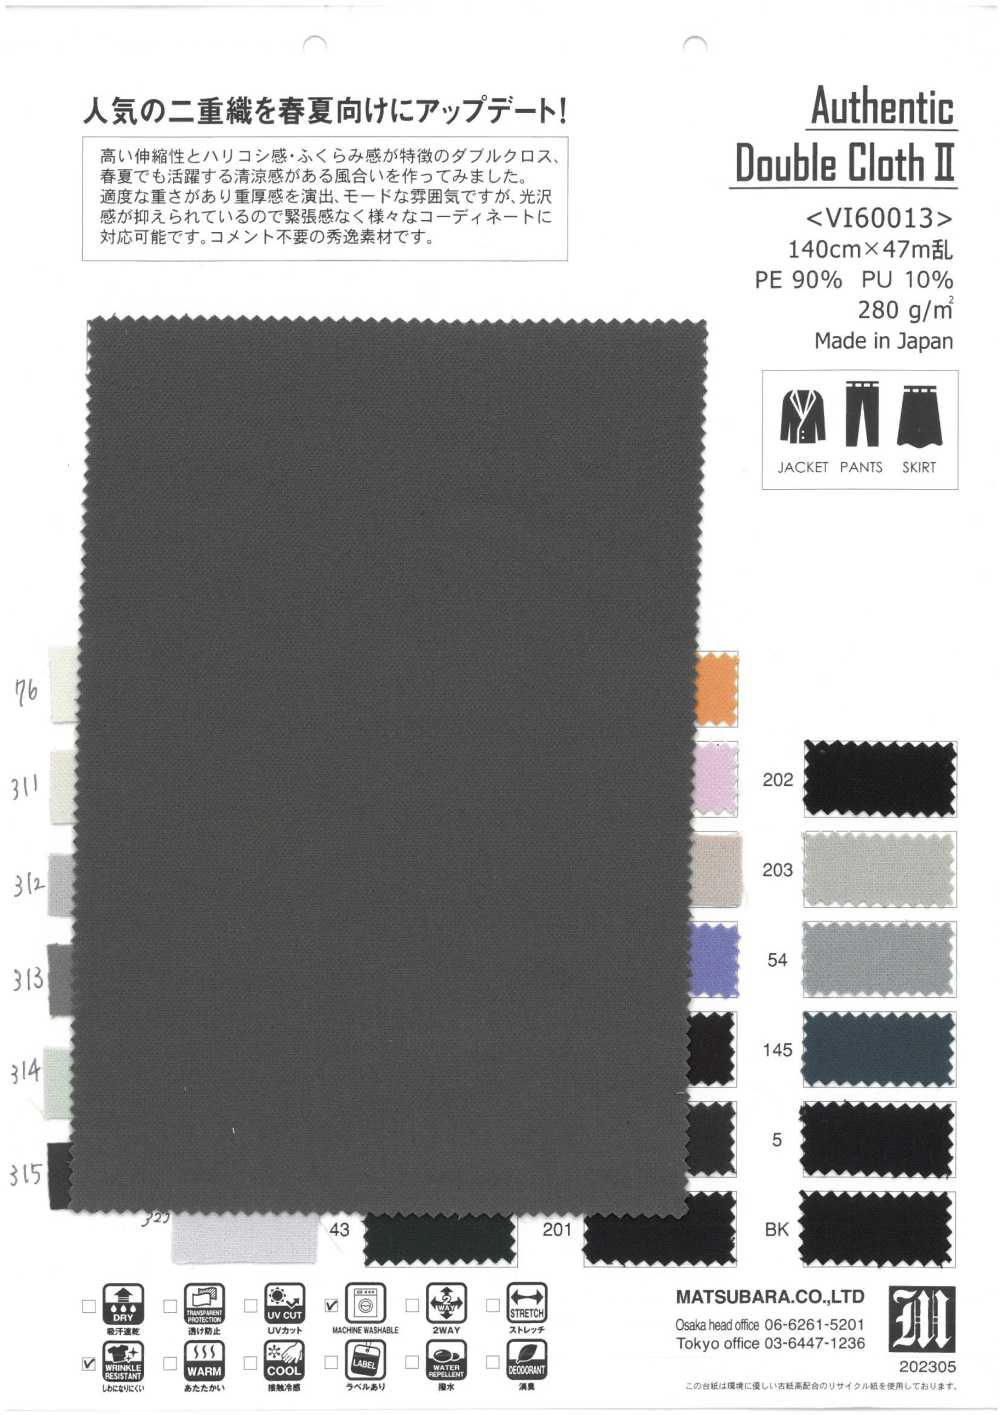 VI60013 Pano Duplo Autêntico Ⅱ[Têxtil / Tecido] Matsubara